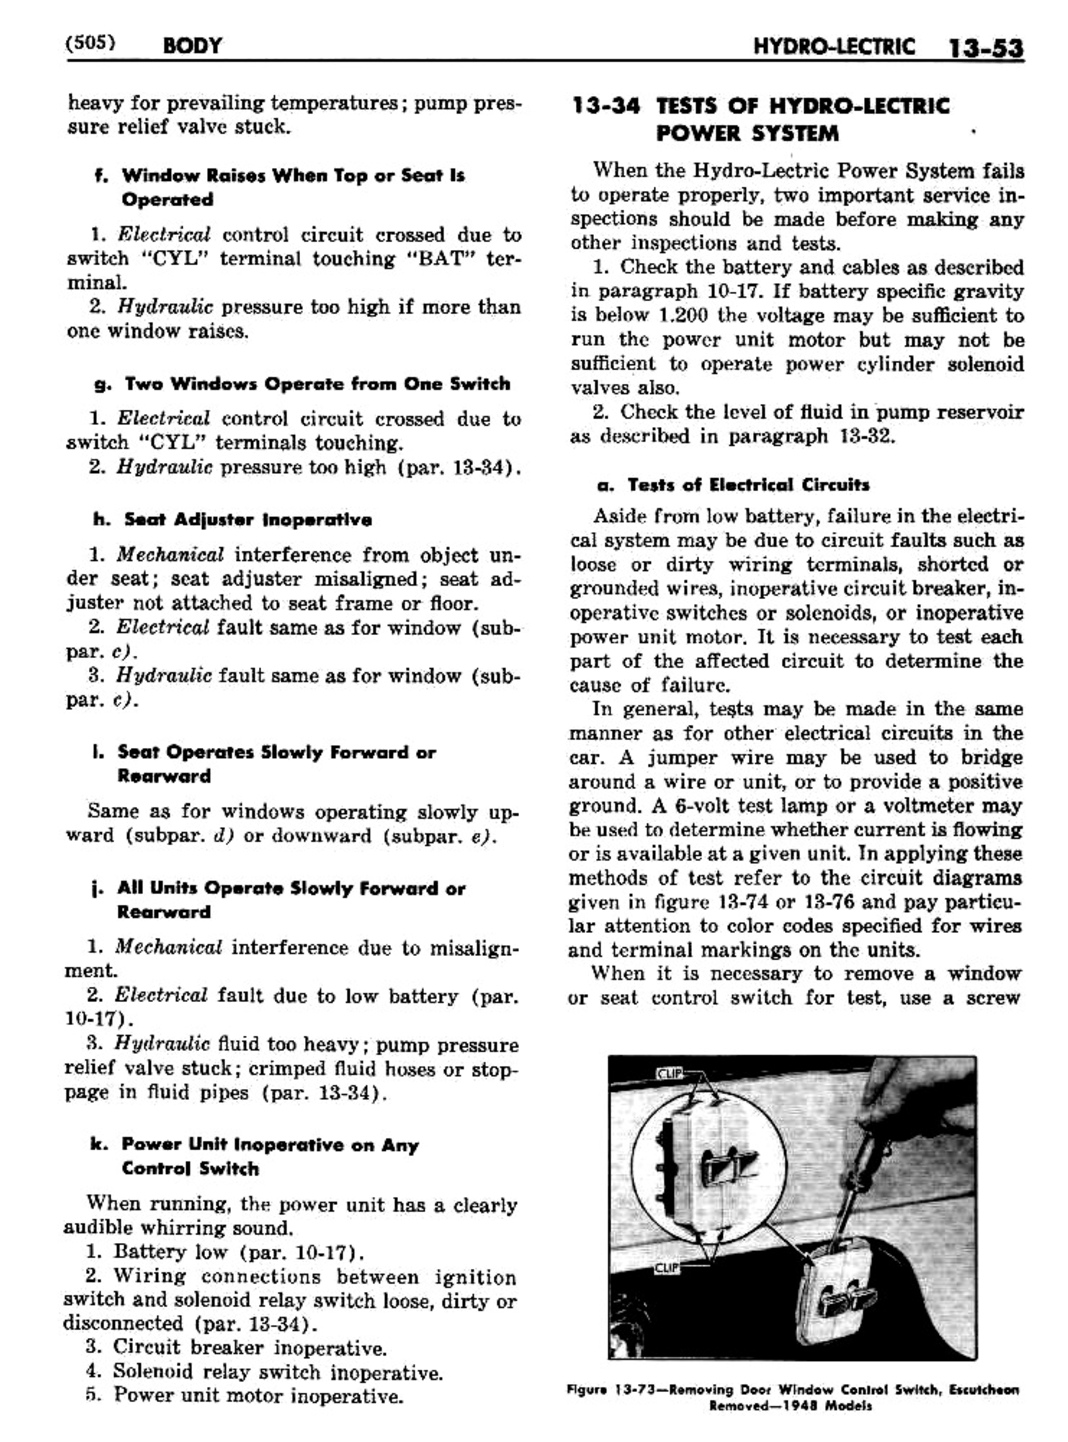 n_14 1948 Buick Shop Manual - Body-053-053.jpg